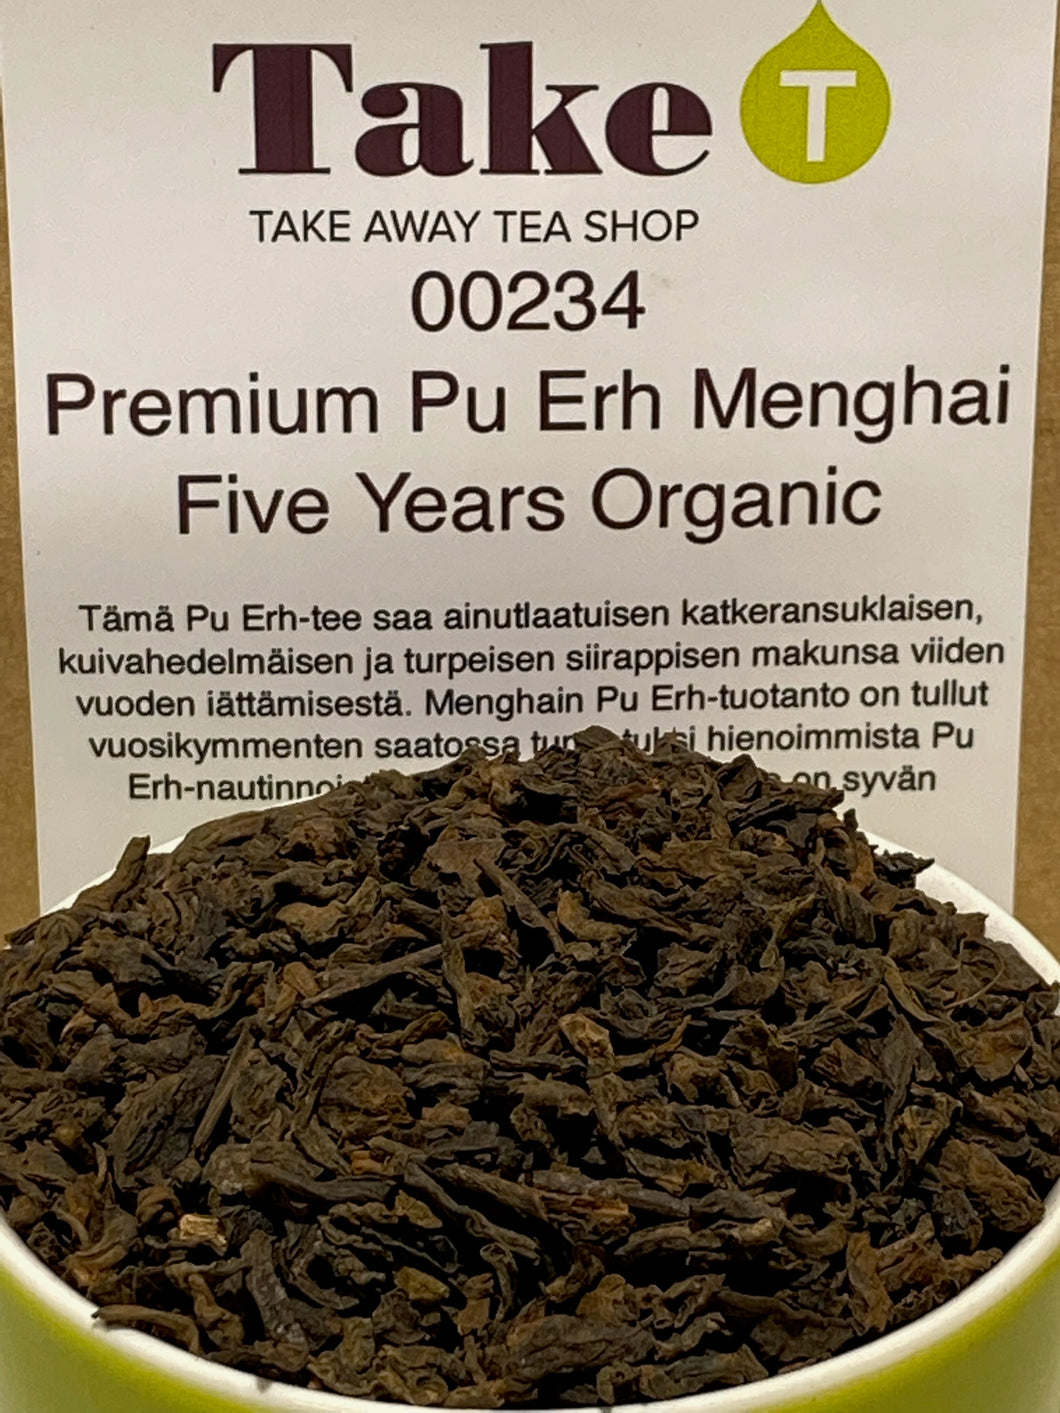 Premium Pu Erh Menghai Five Years Organic